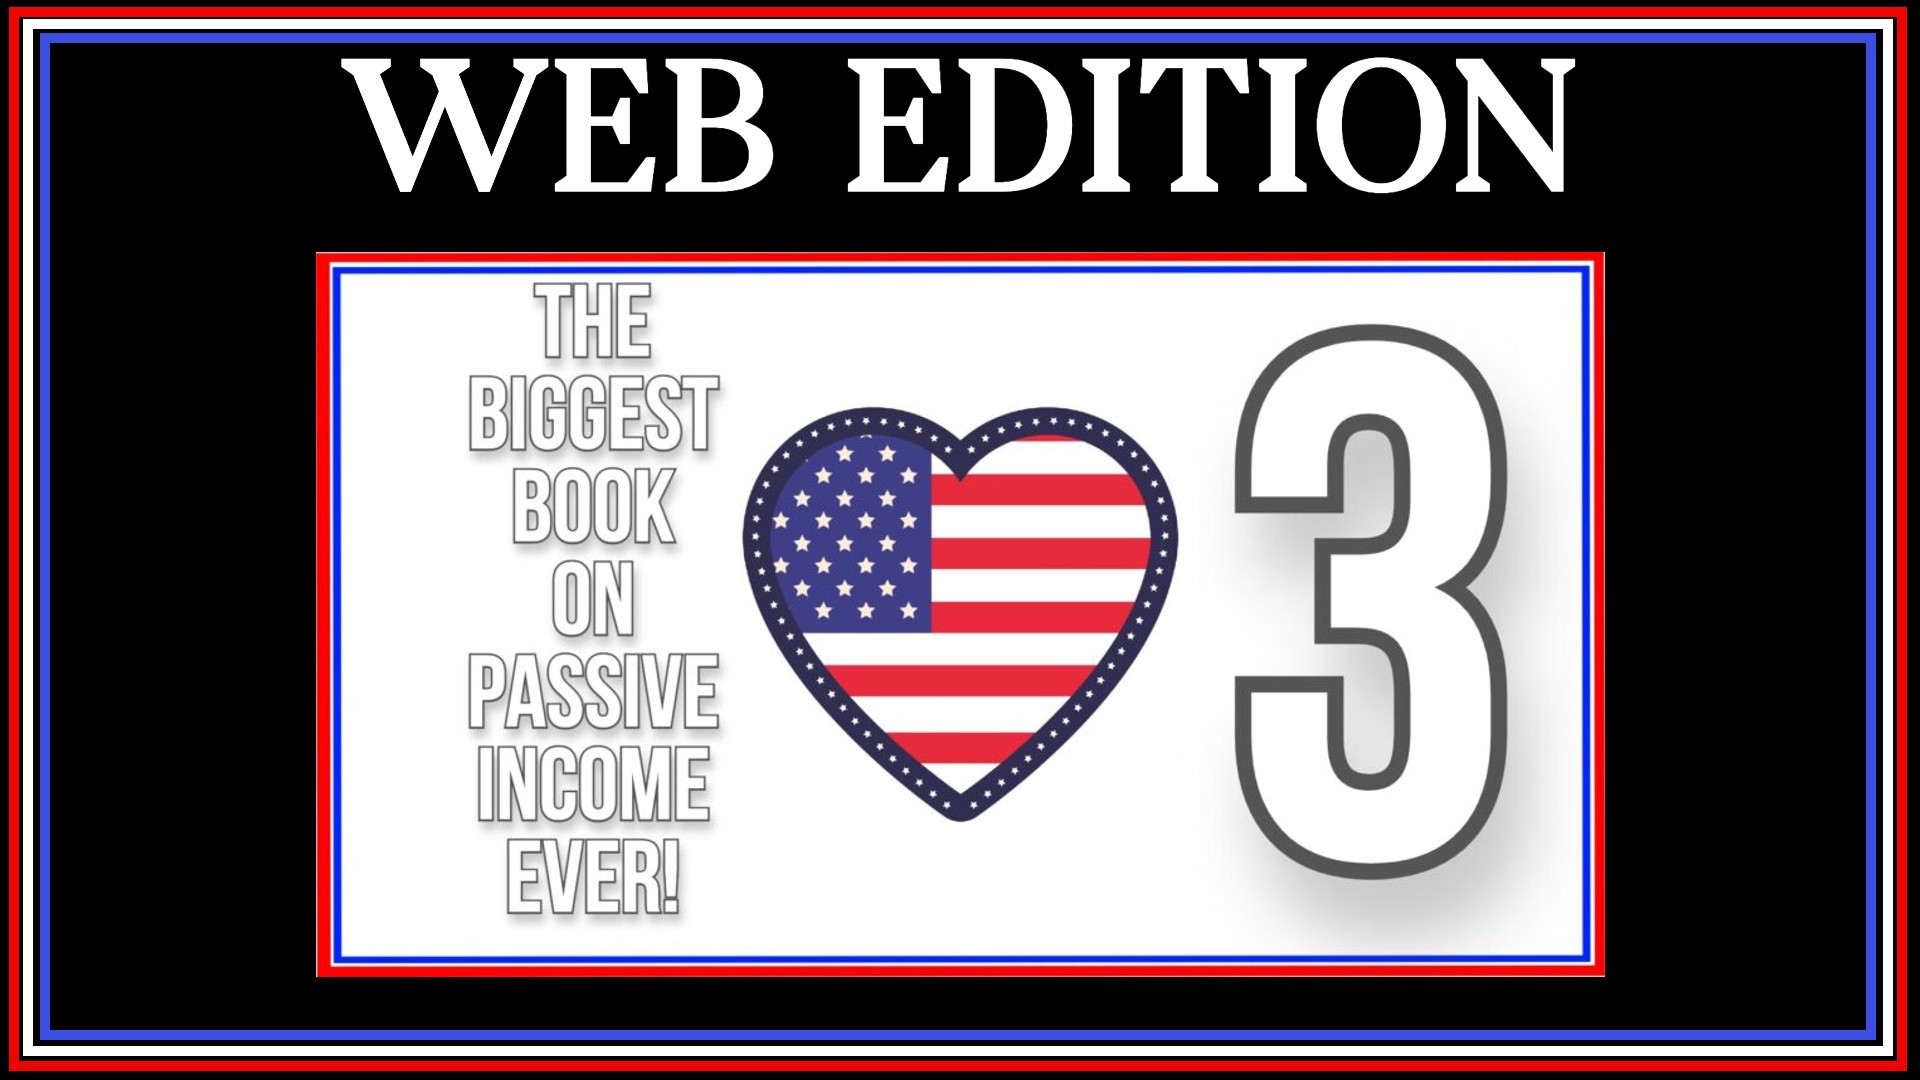 Web Edition- The Biggest Book on Passive Income Ever 3!